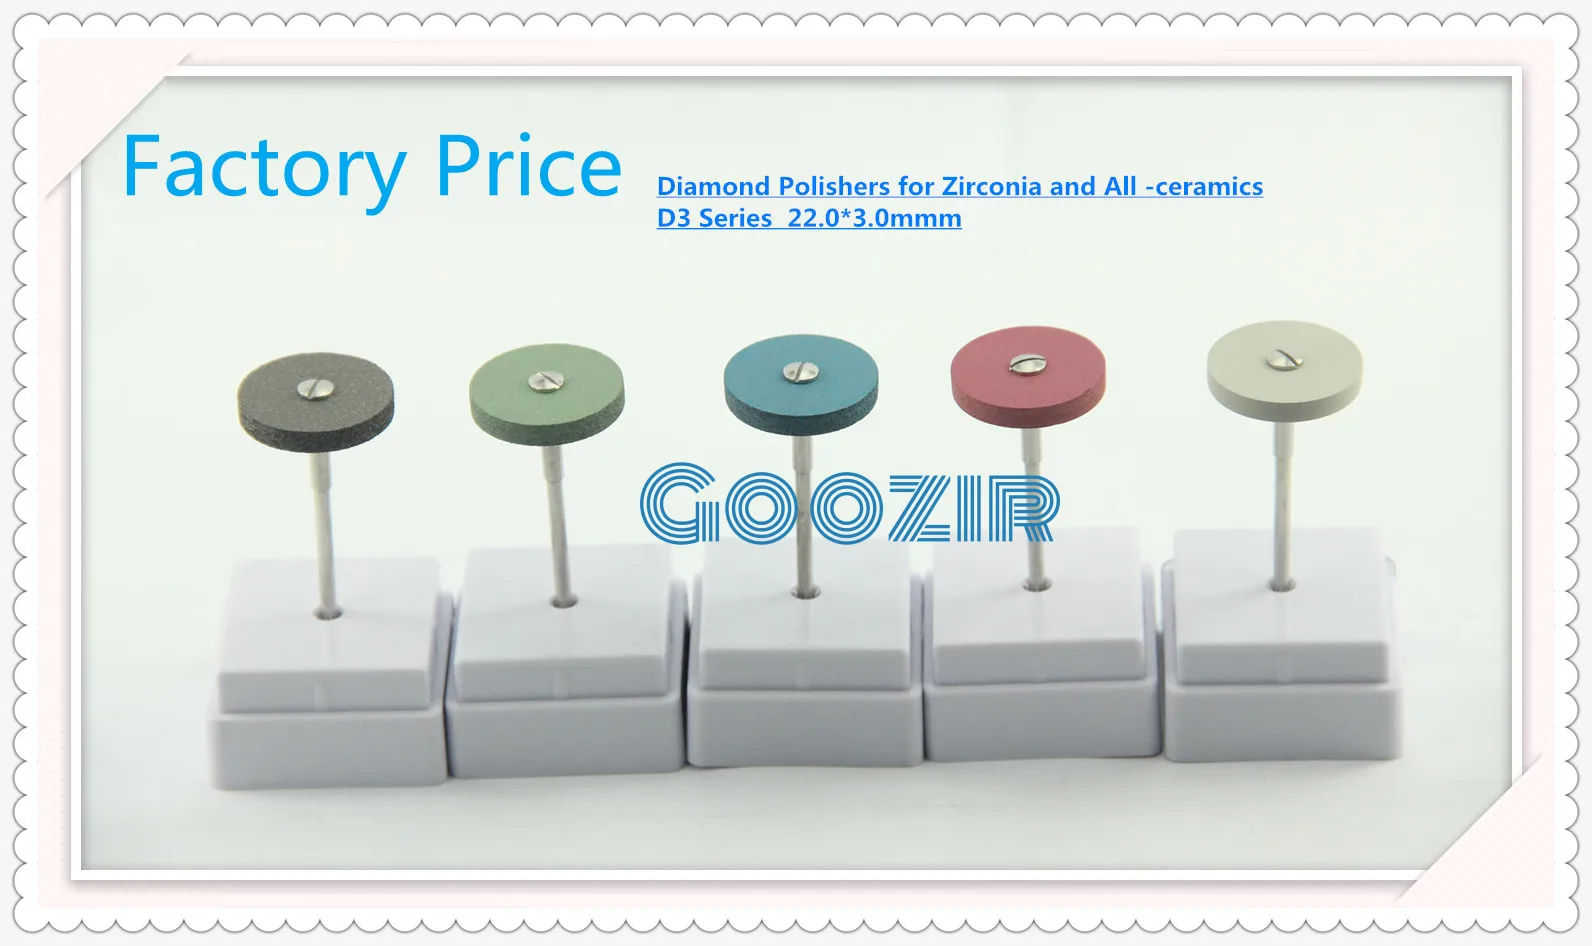 Goozir Dental Rubber Diamond Polish Wheels Saw Polishing Stone Grinding Quick Polisher Ceramics Crowns Laboratory Product